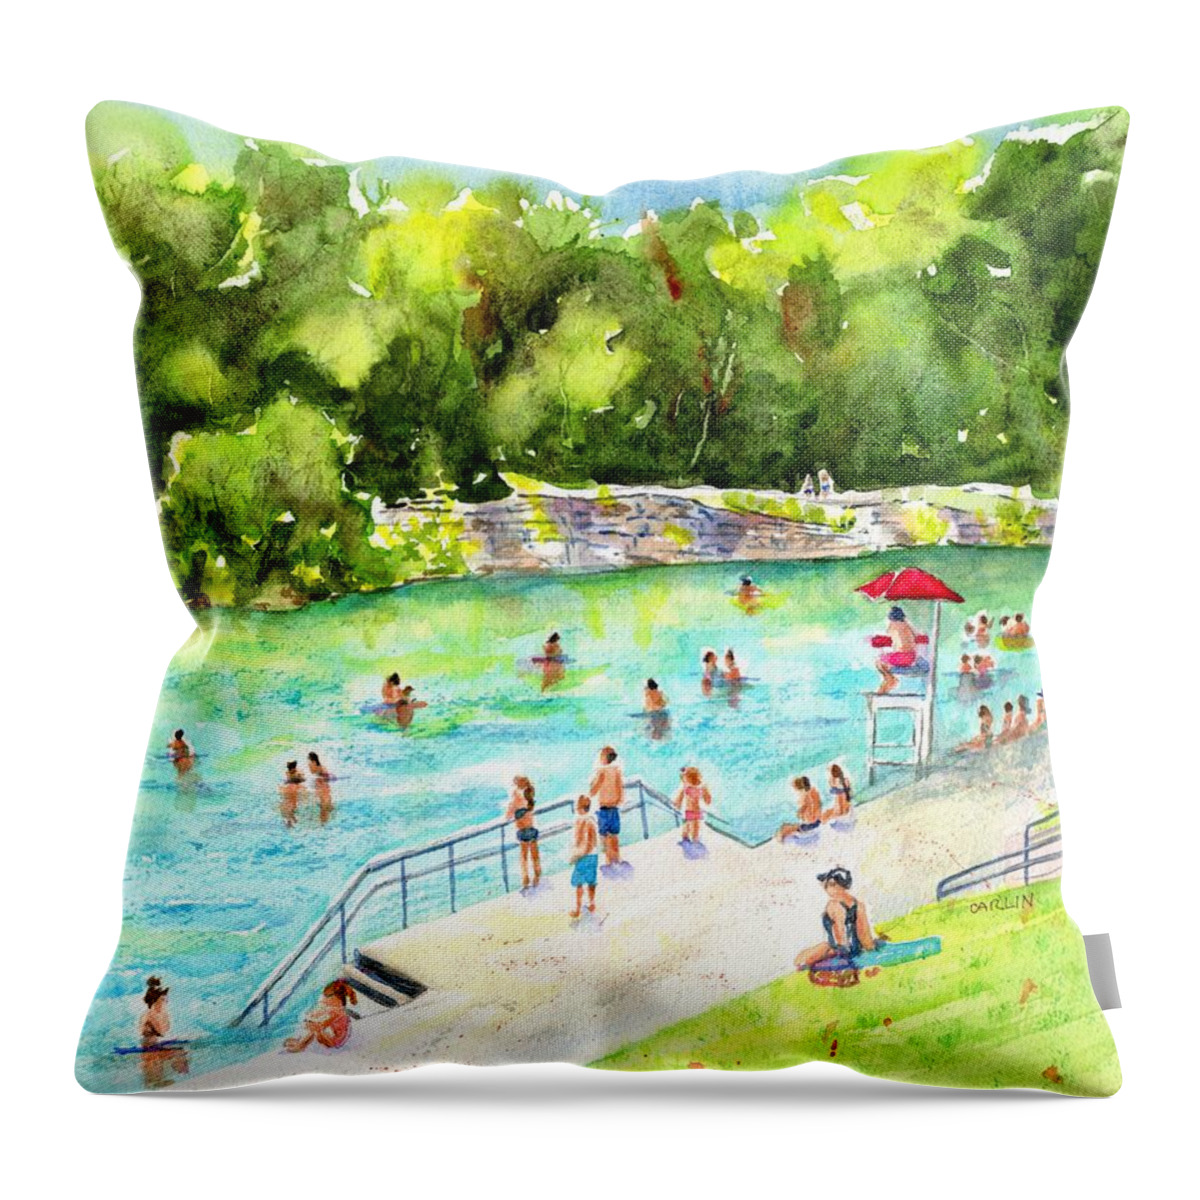 Austin Throw Pillow featuring the painting Barton Springs Pool by Carlin Blahnik CarlinArtWatercolor